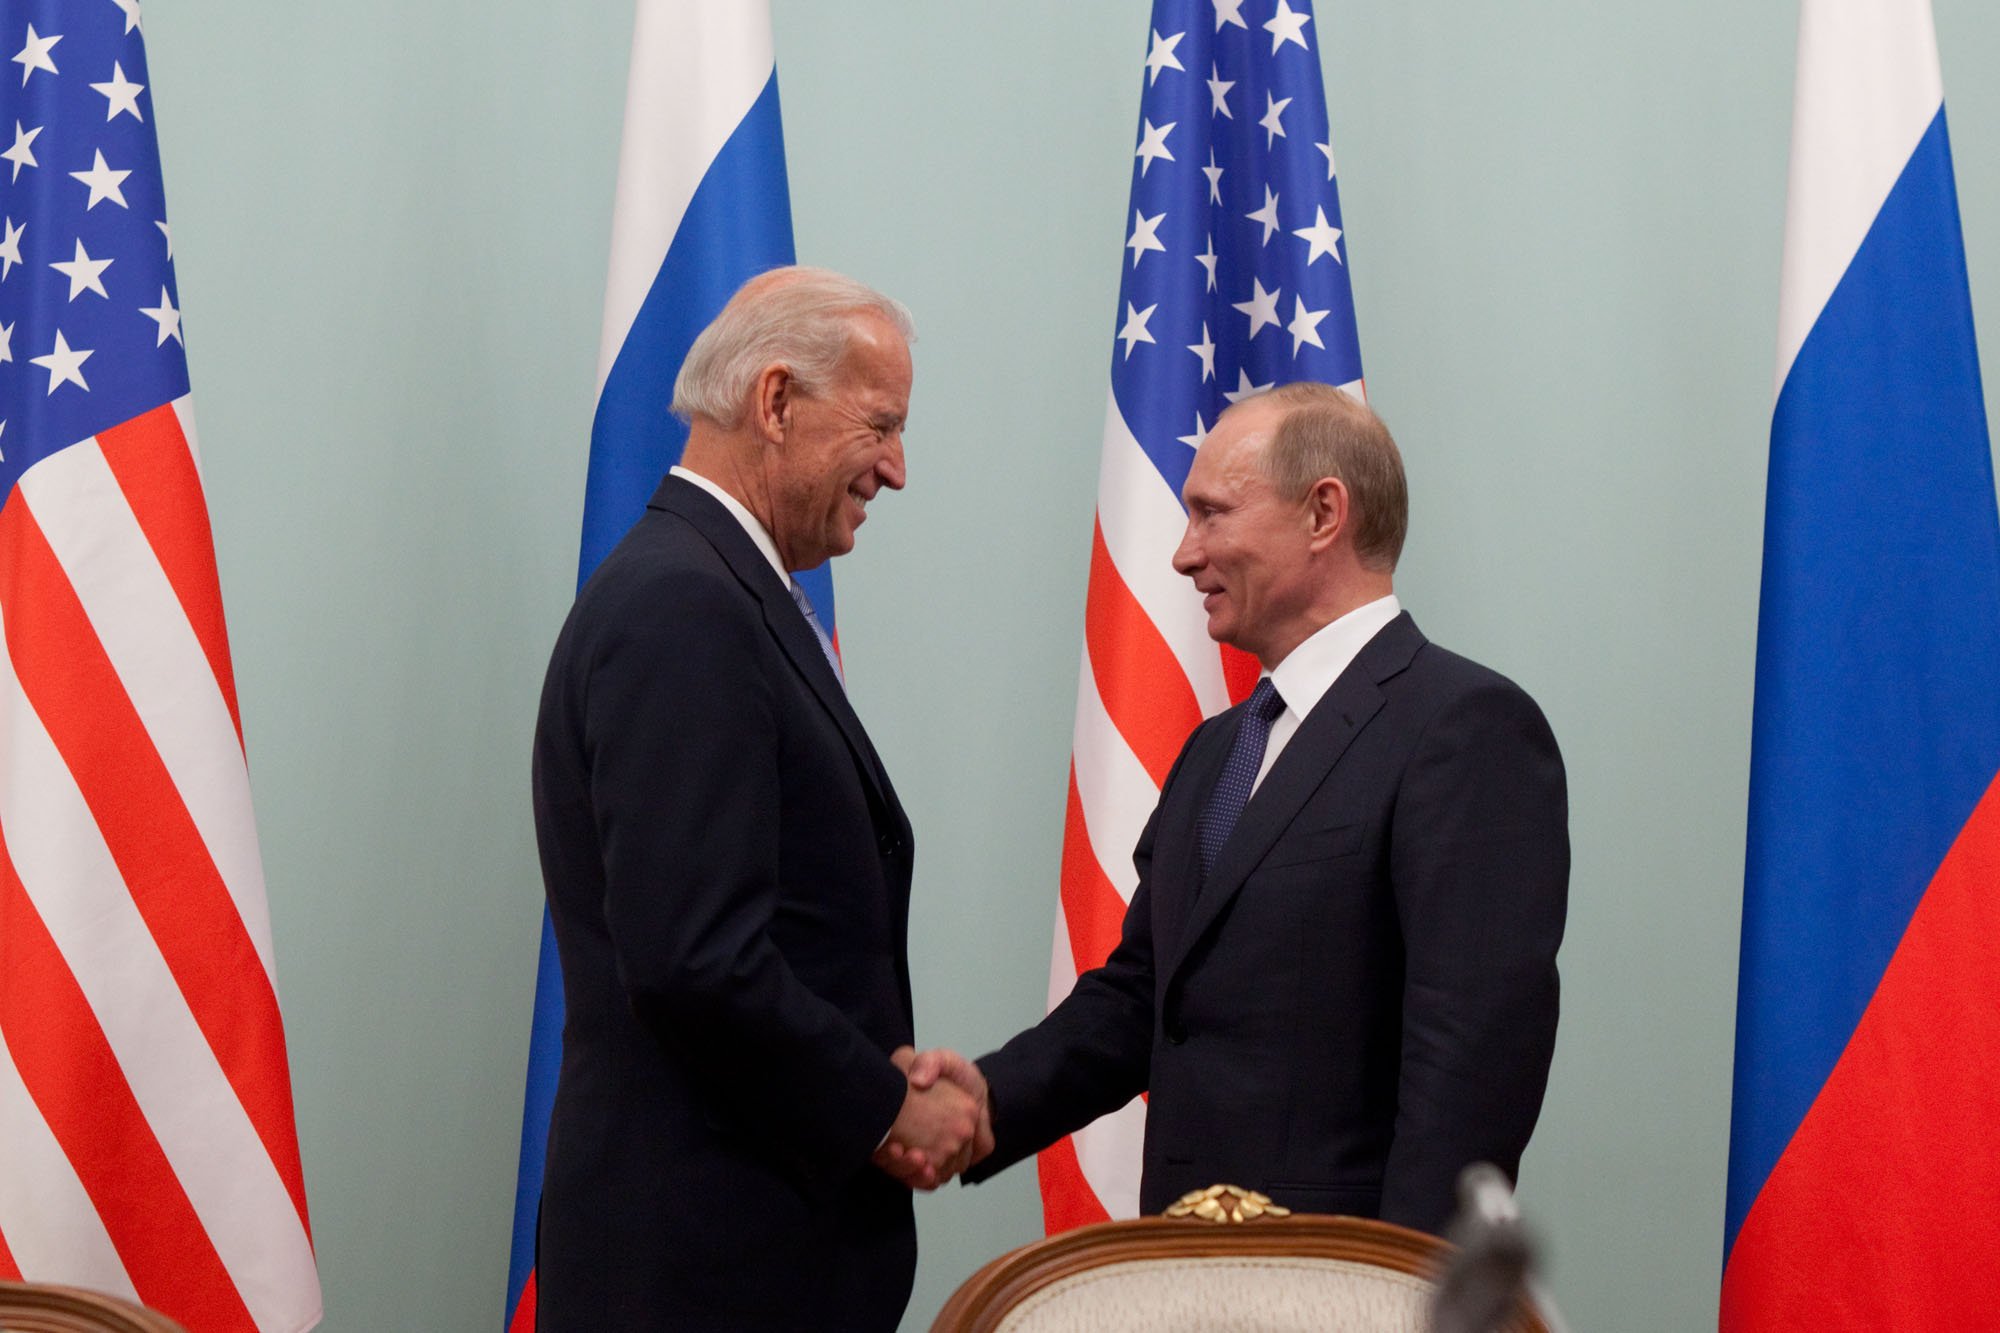 Former US vice-president Joe Biden accuses Russia of "meddling" in Catalan referendum